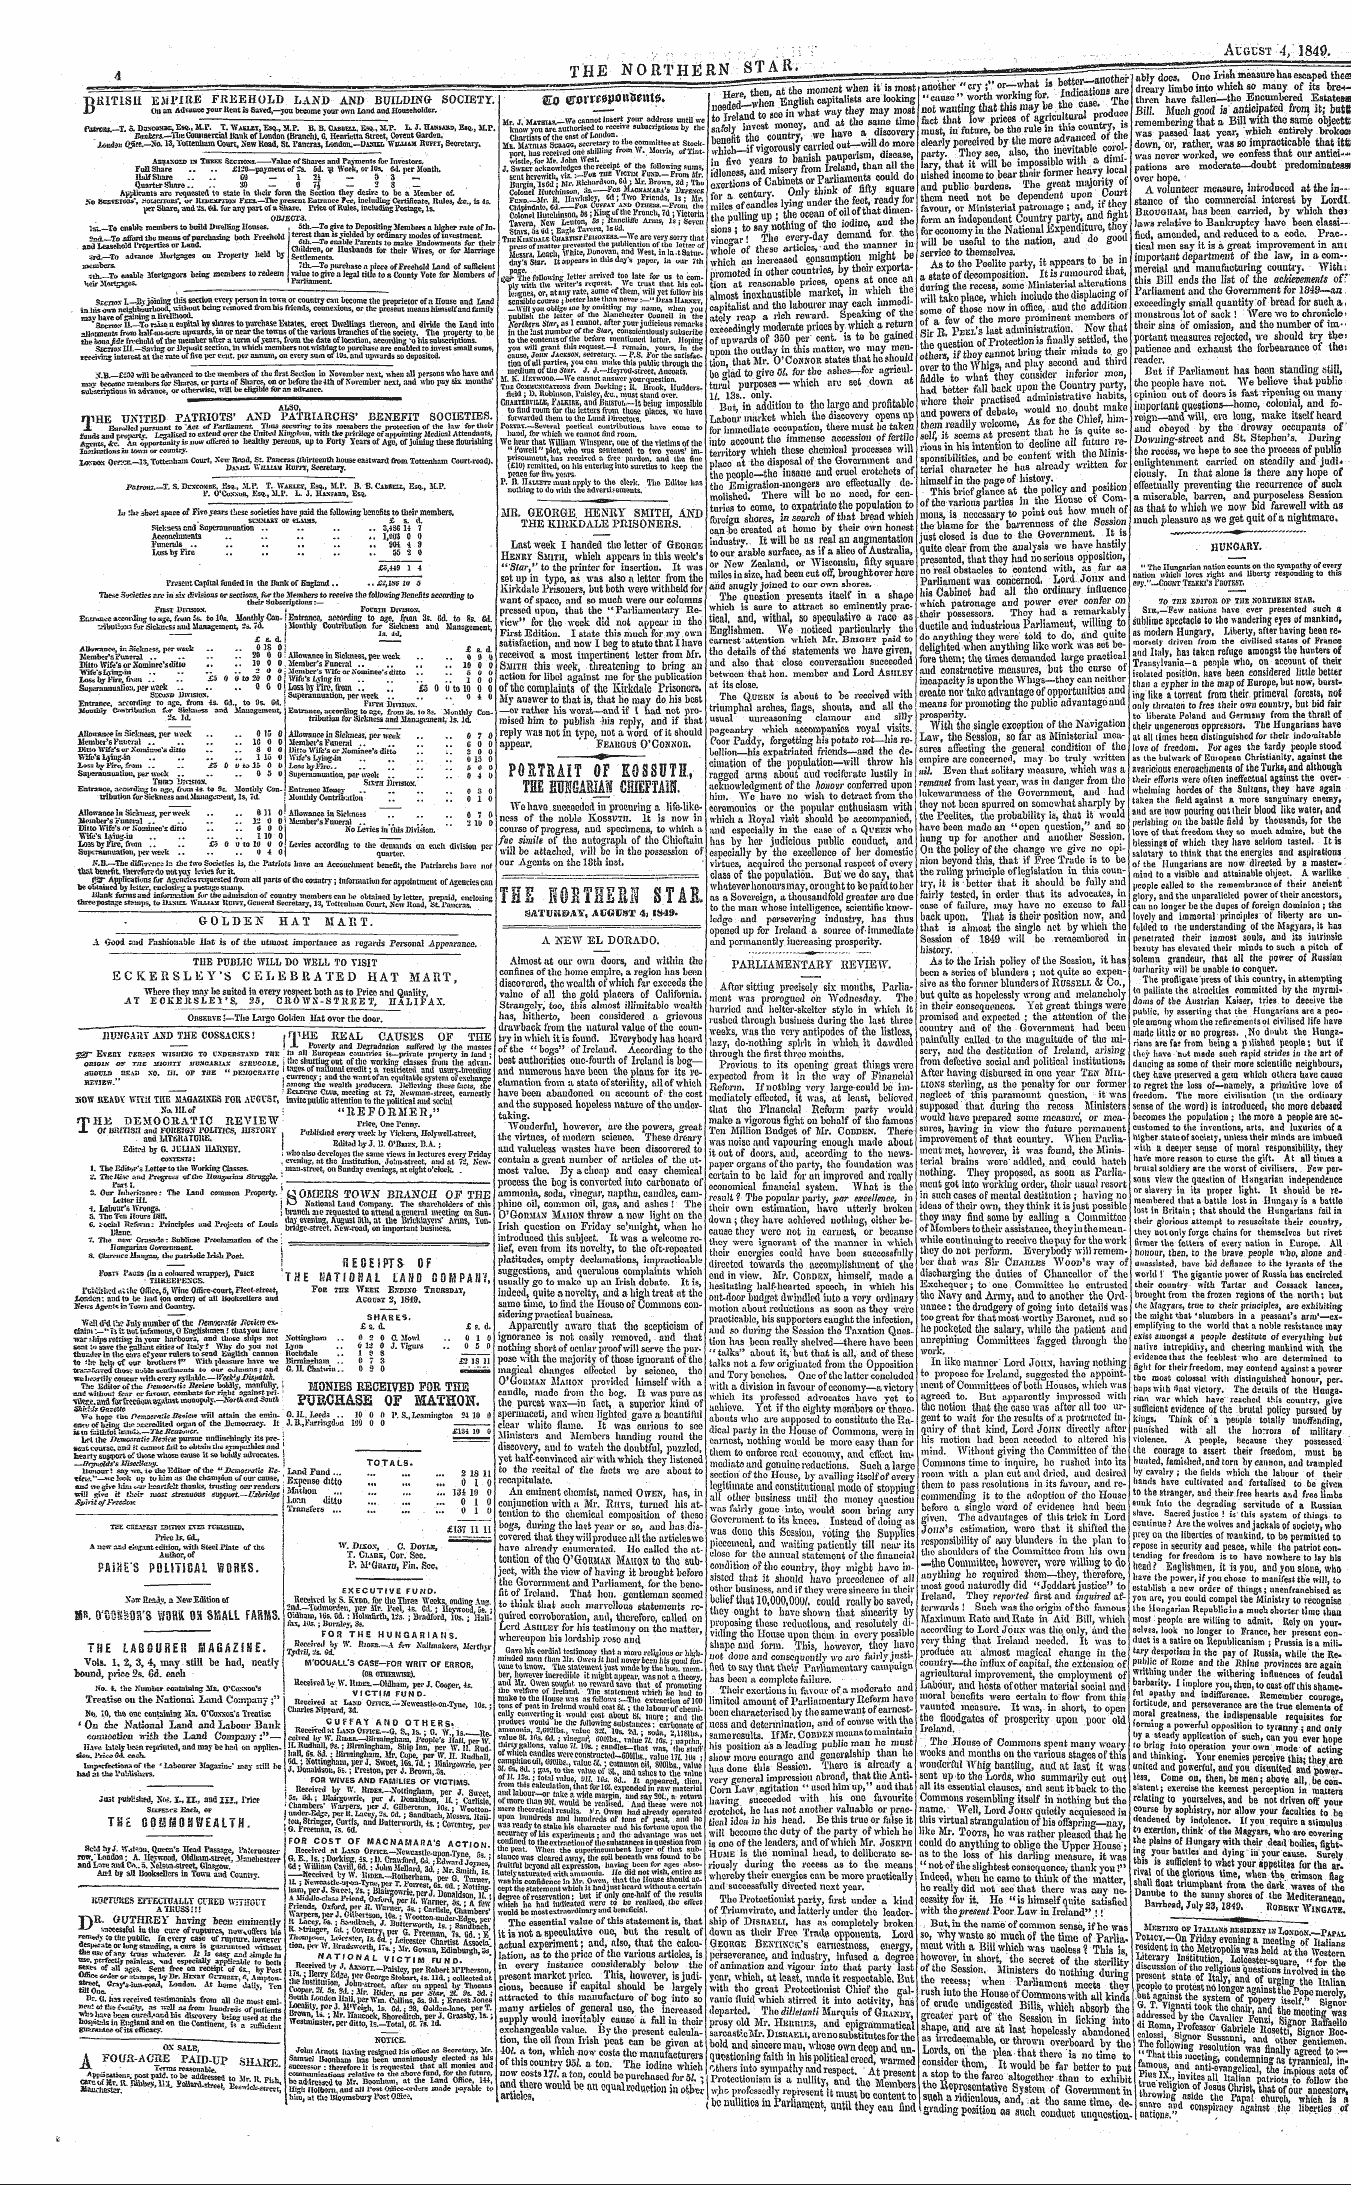 Northern Star (1837-1852): jS F Y, 3rd edition - Ad00415